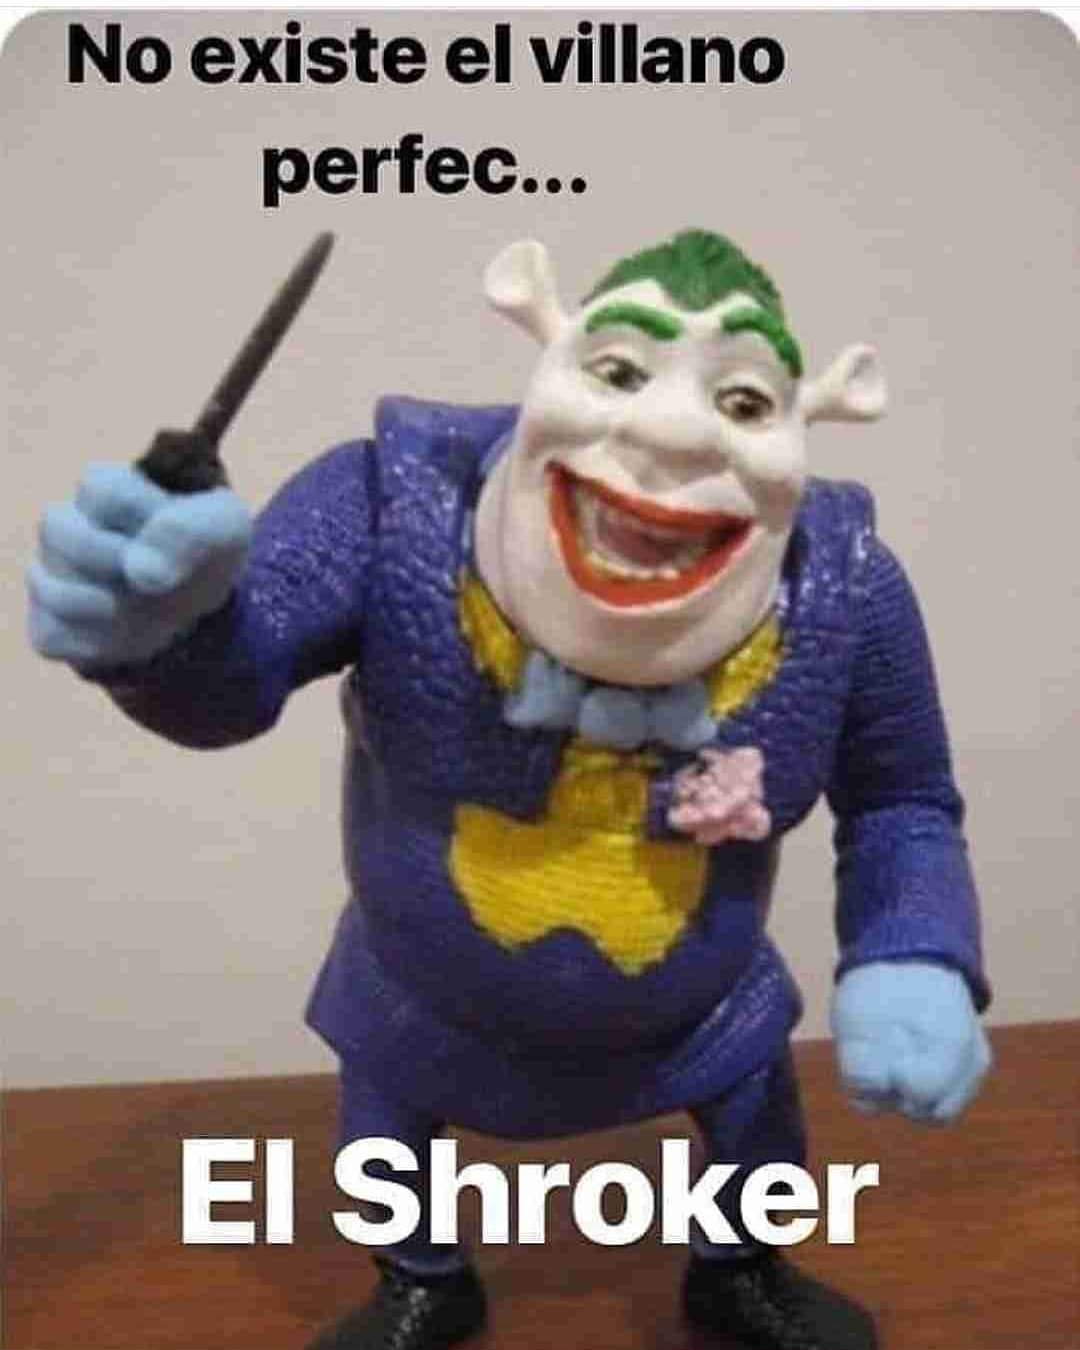 No existe el villano perfec...  El Shroker.